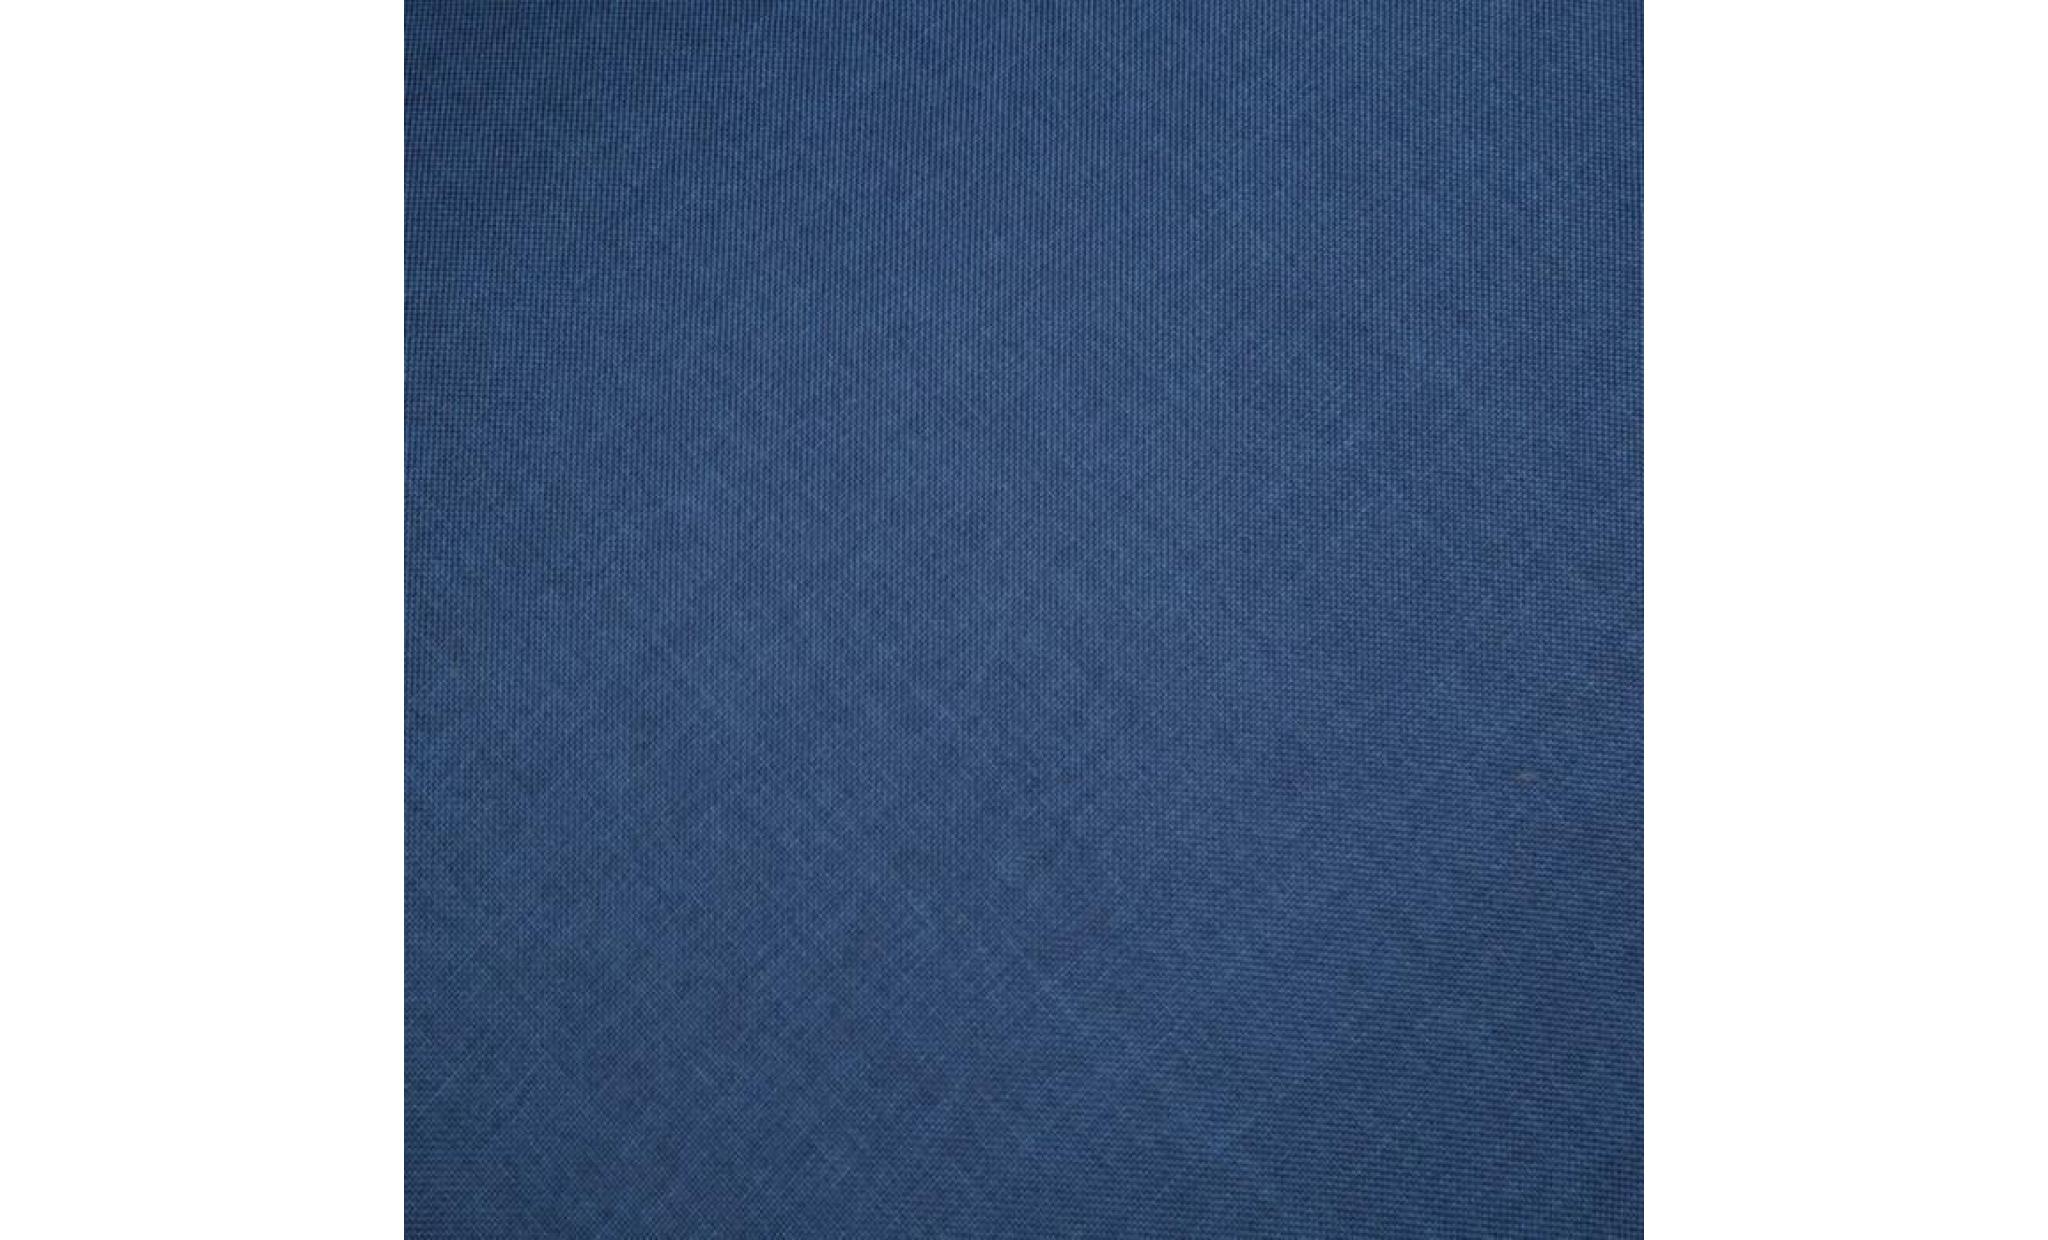 fauteuil tissu bleu69 x 69 x 75 cm pas cher